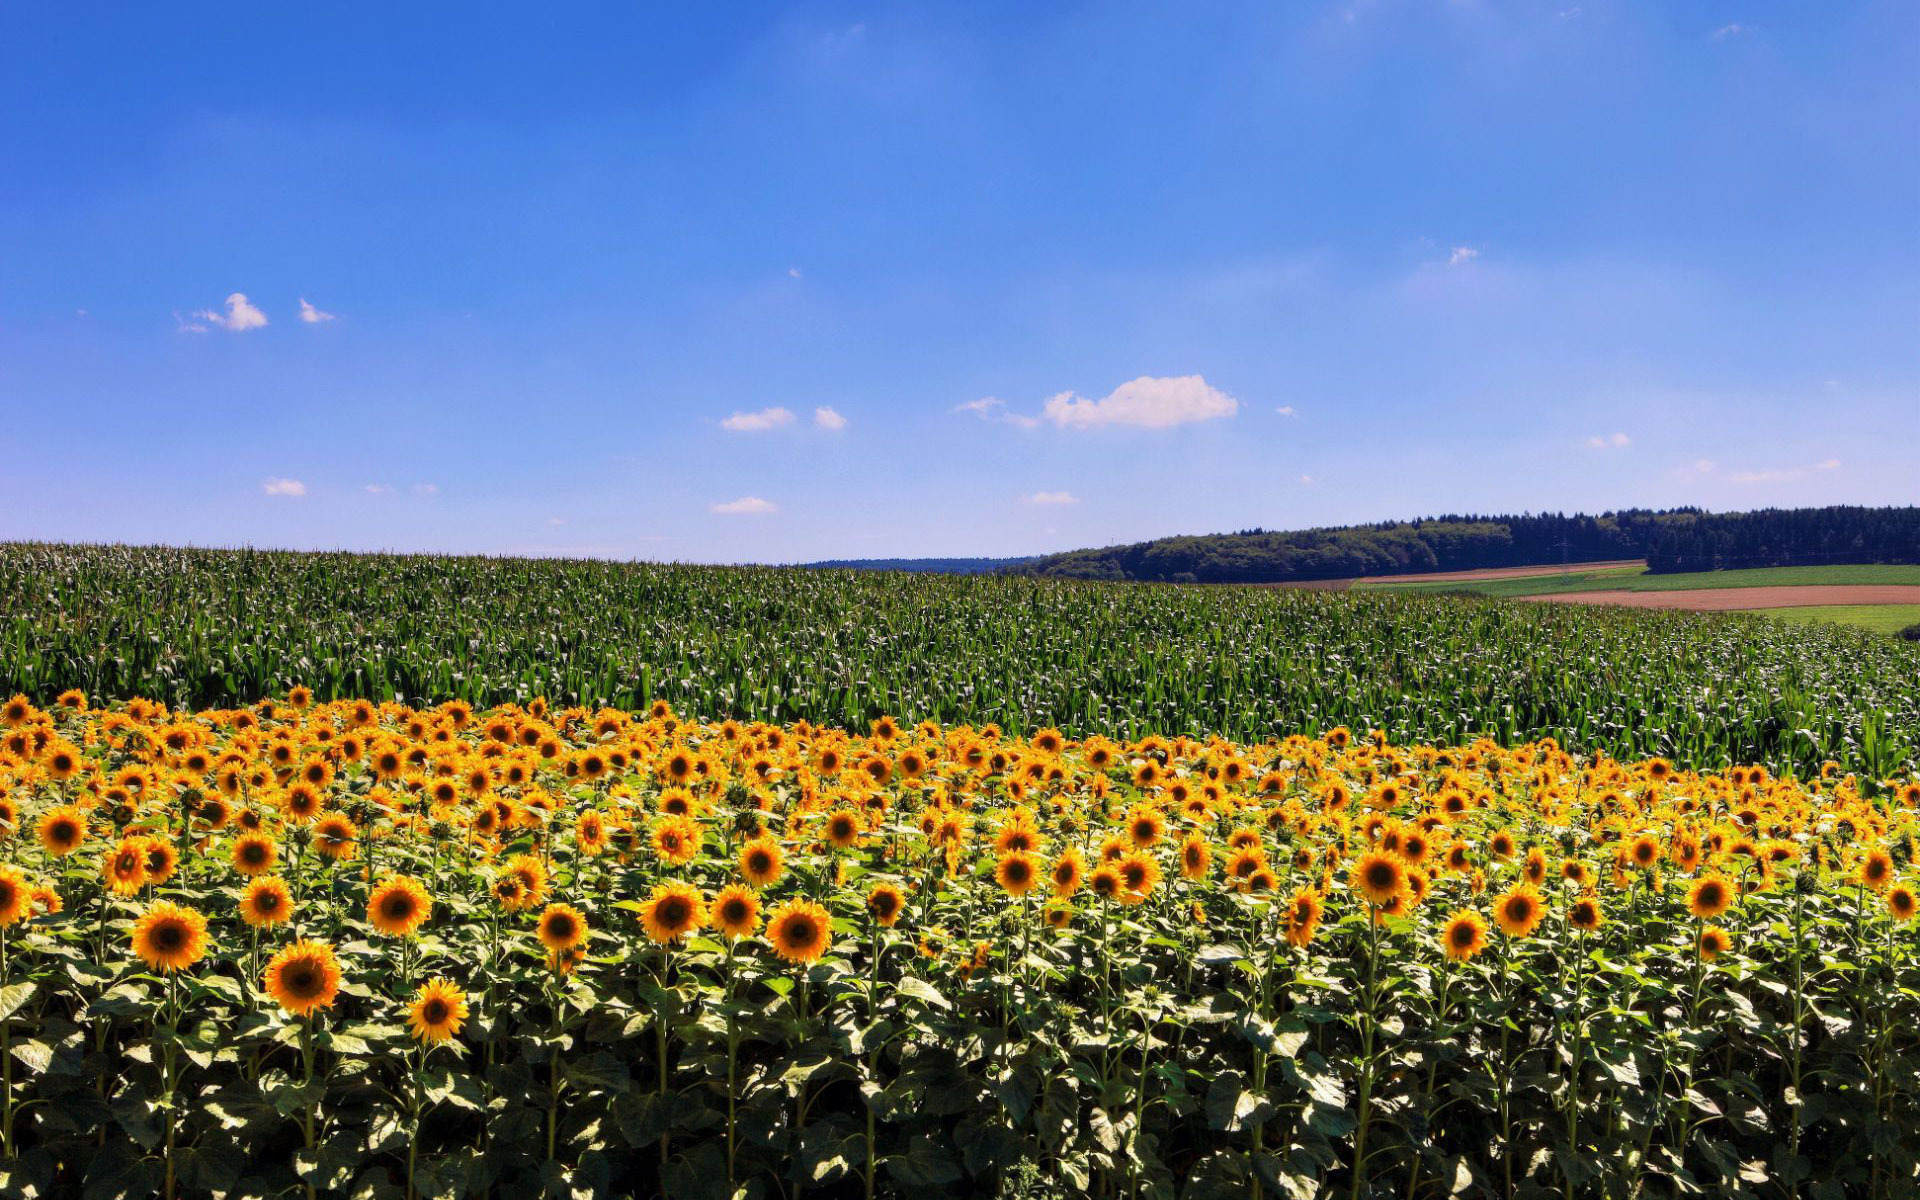 Field Of Sunflowers Wallpaper